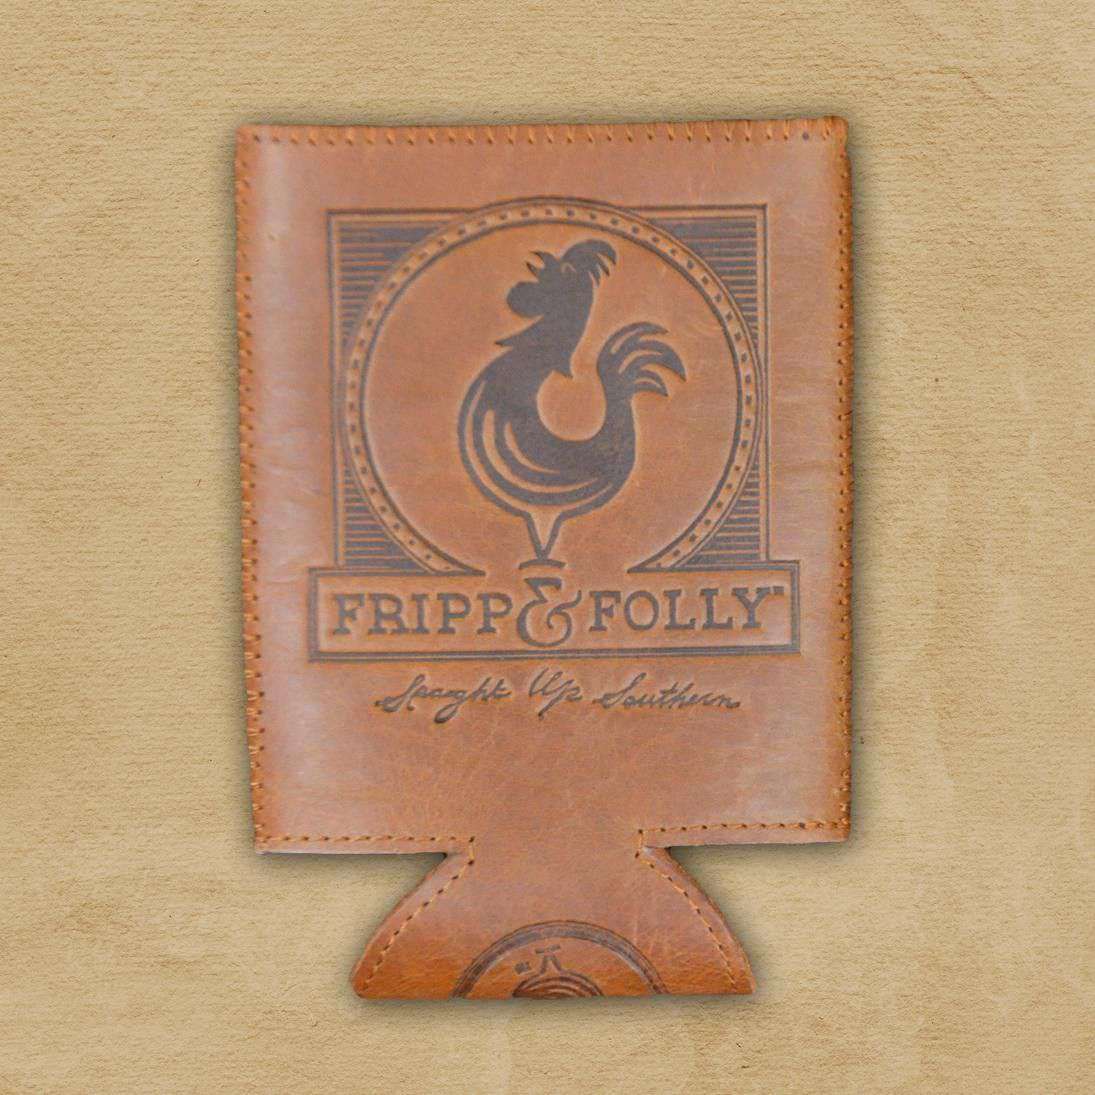 Fripp Logo Genuine Leather/Neoprene Bottle Can Holder by Fripp & Folly - Country Club Prep